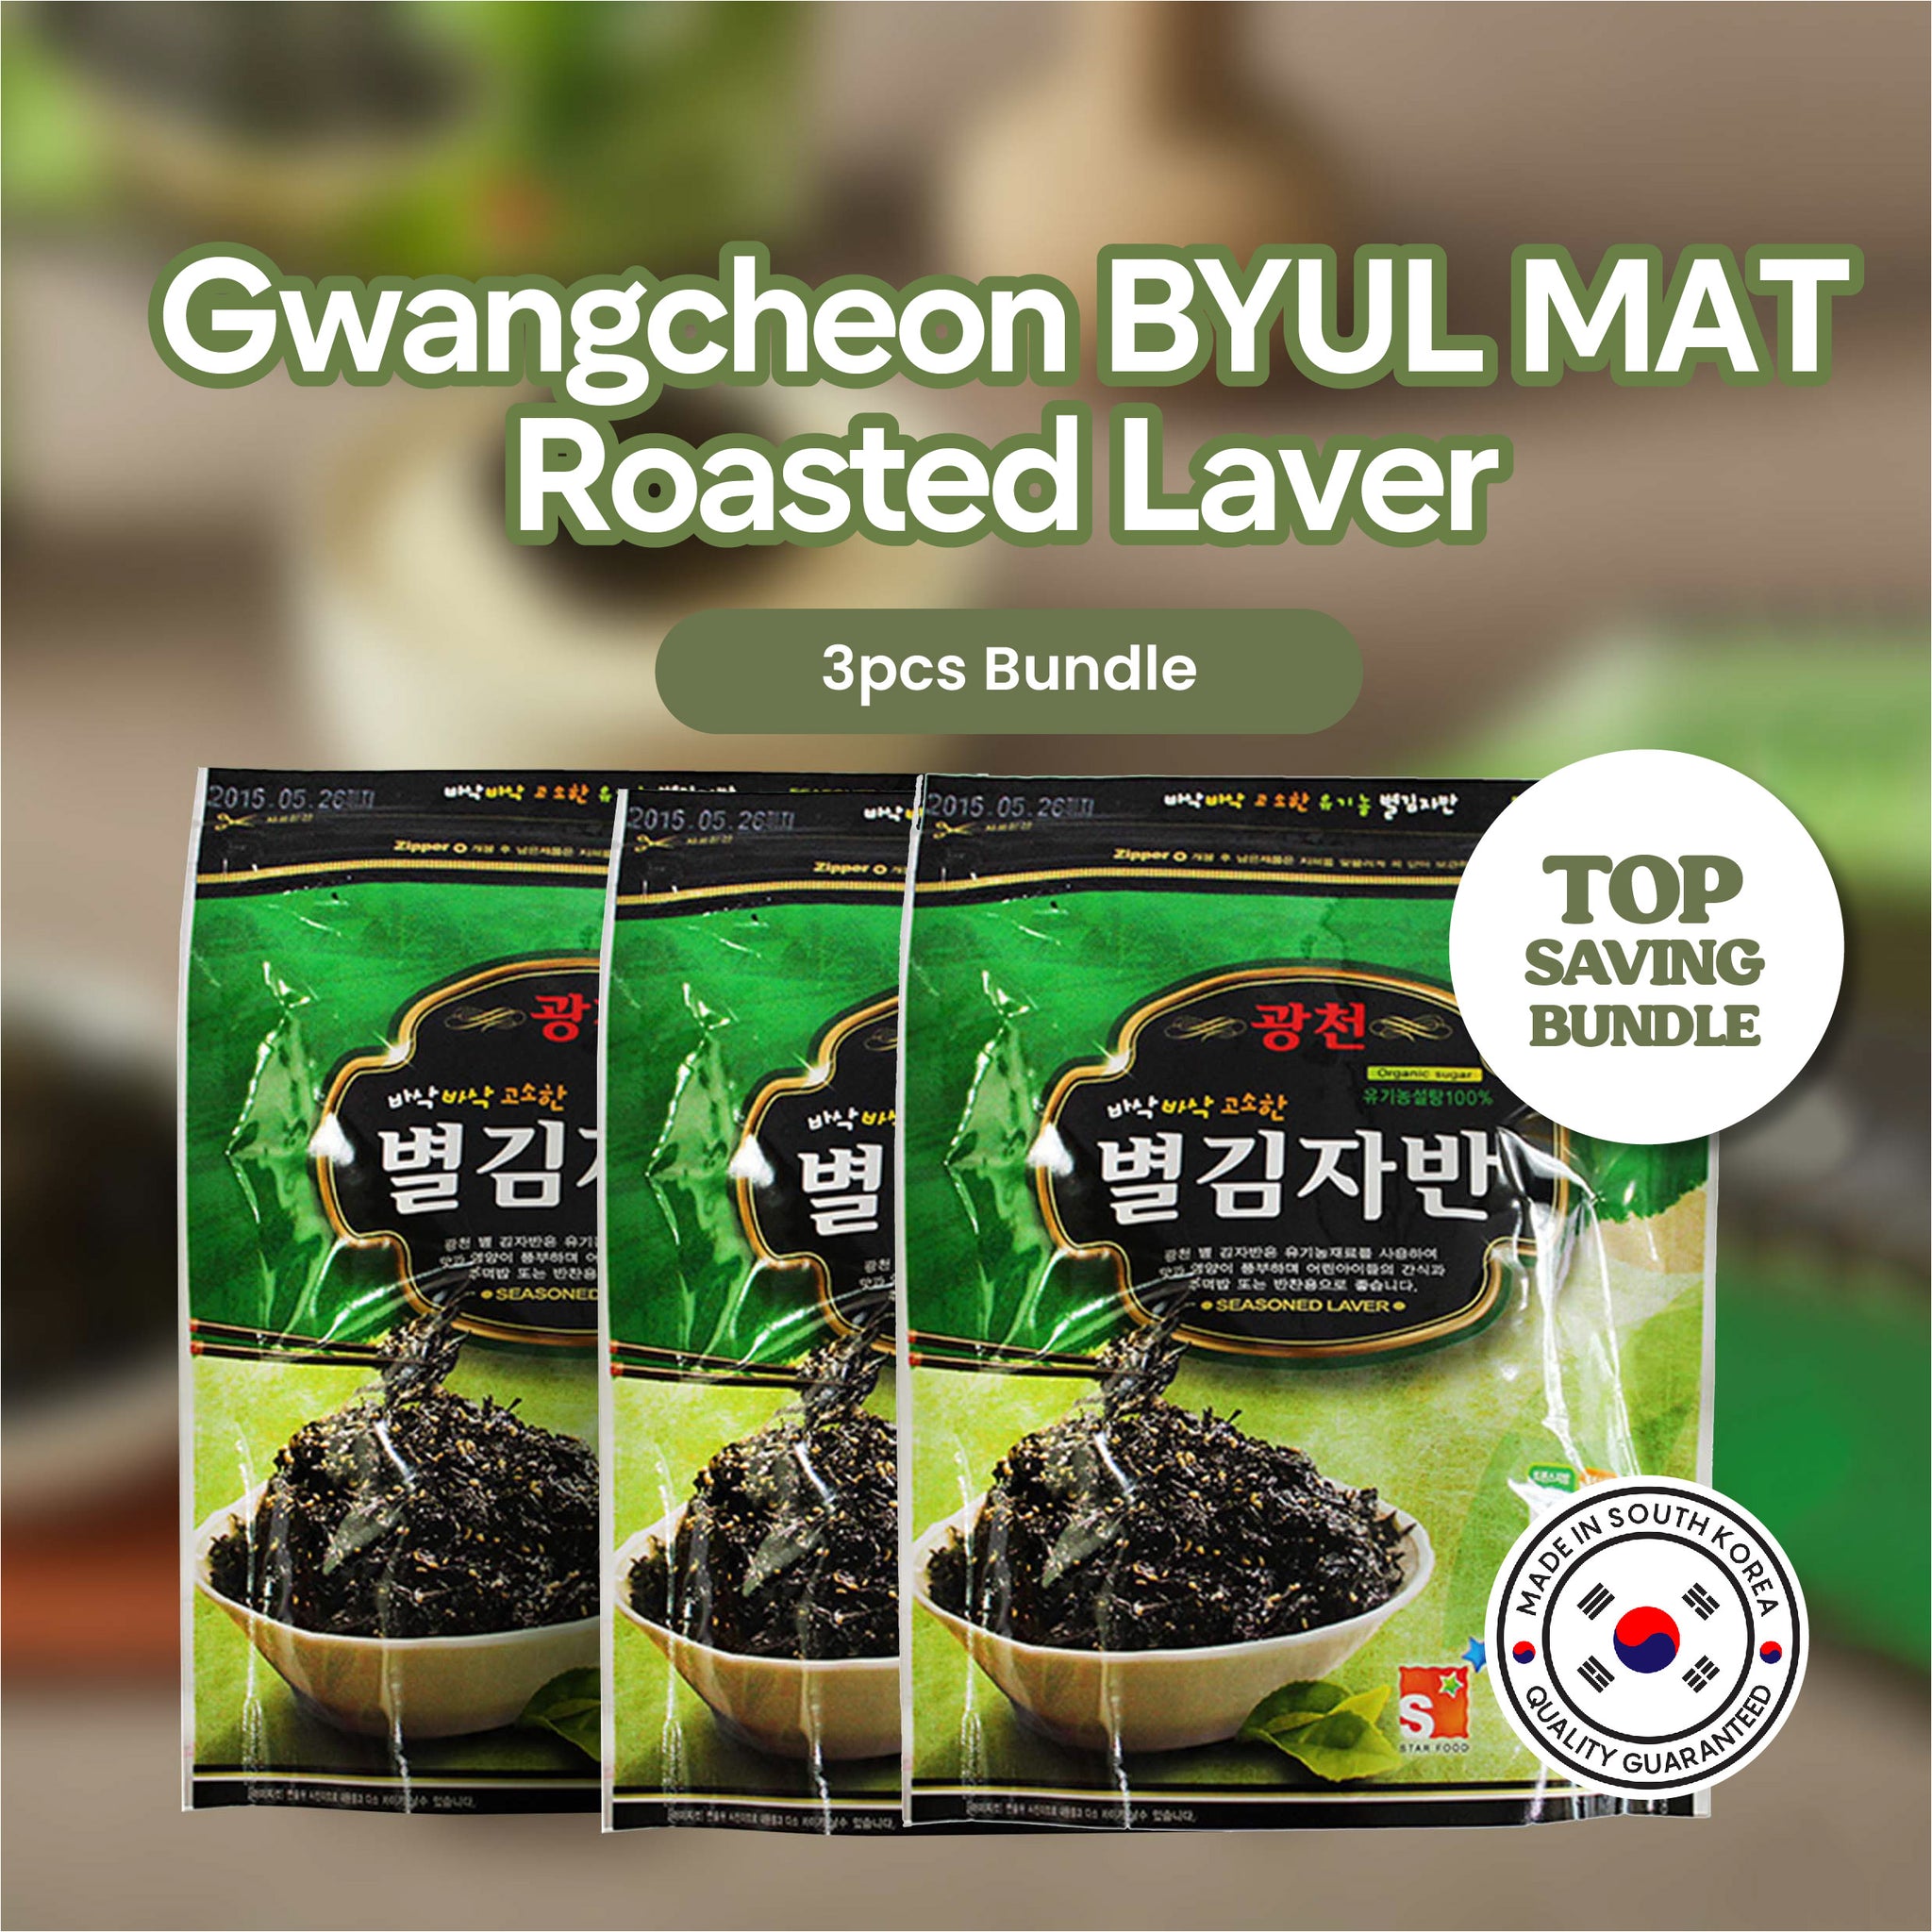 Gwangcheon BYUL MAT Roasted Laver (Jaban Laver)